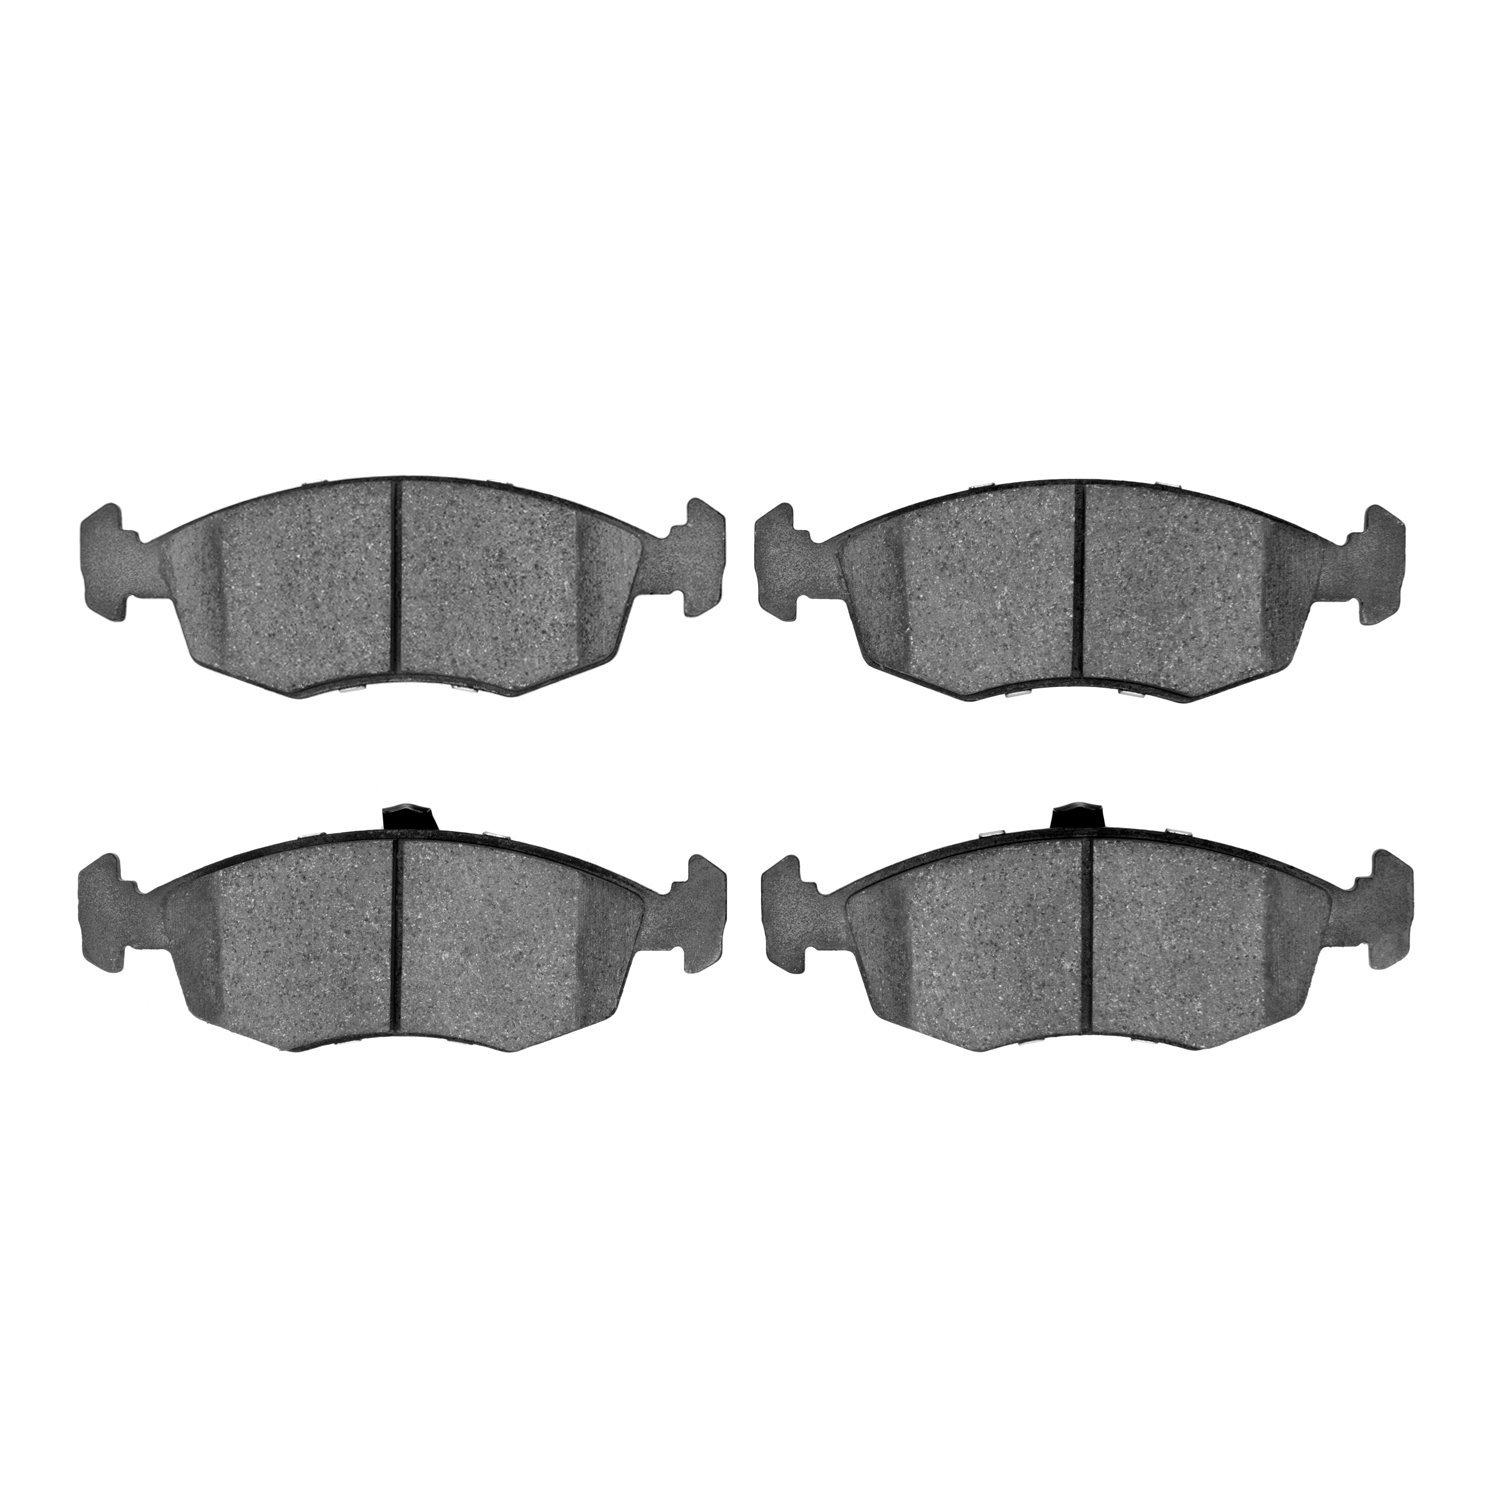 1310-1538-00 3000-Series Ceramic Brake Pads, 2015-2017 Mopar, Position: Front